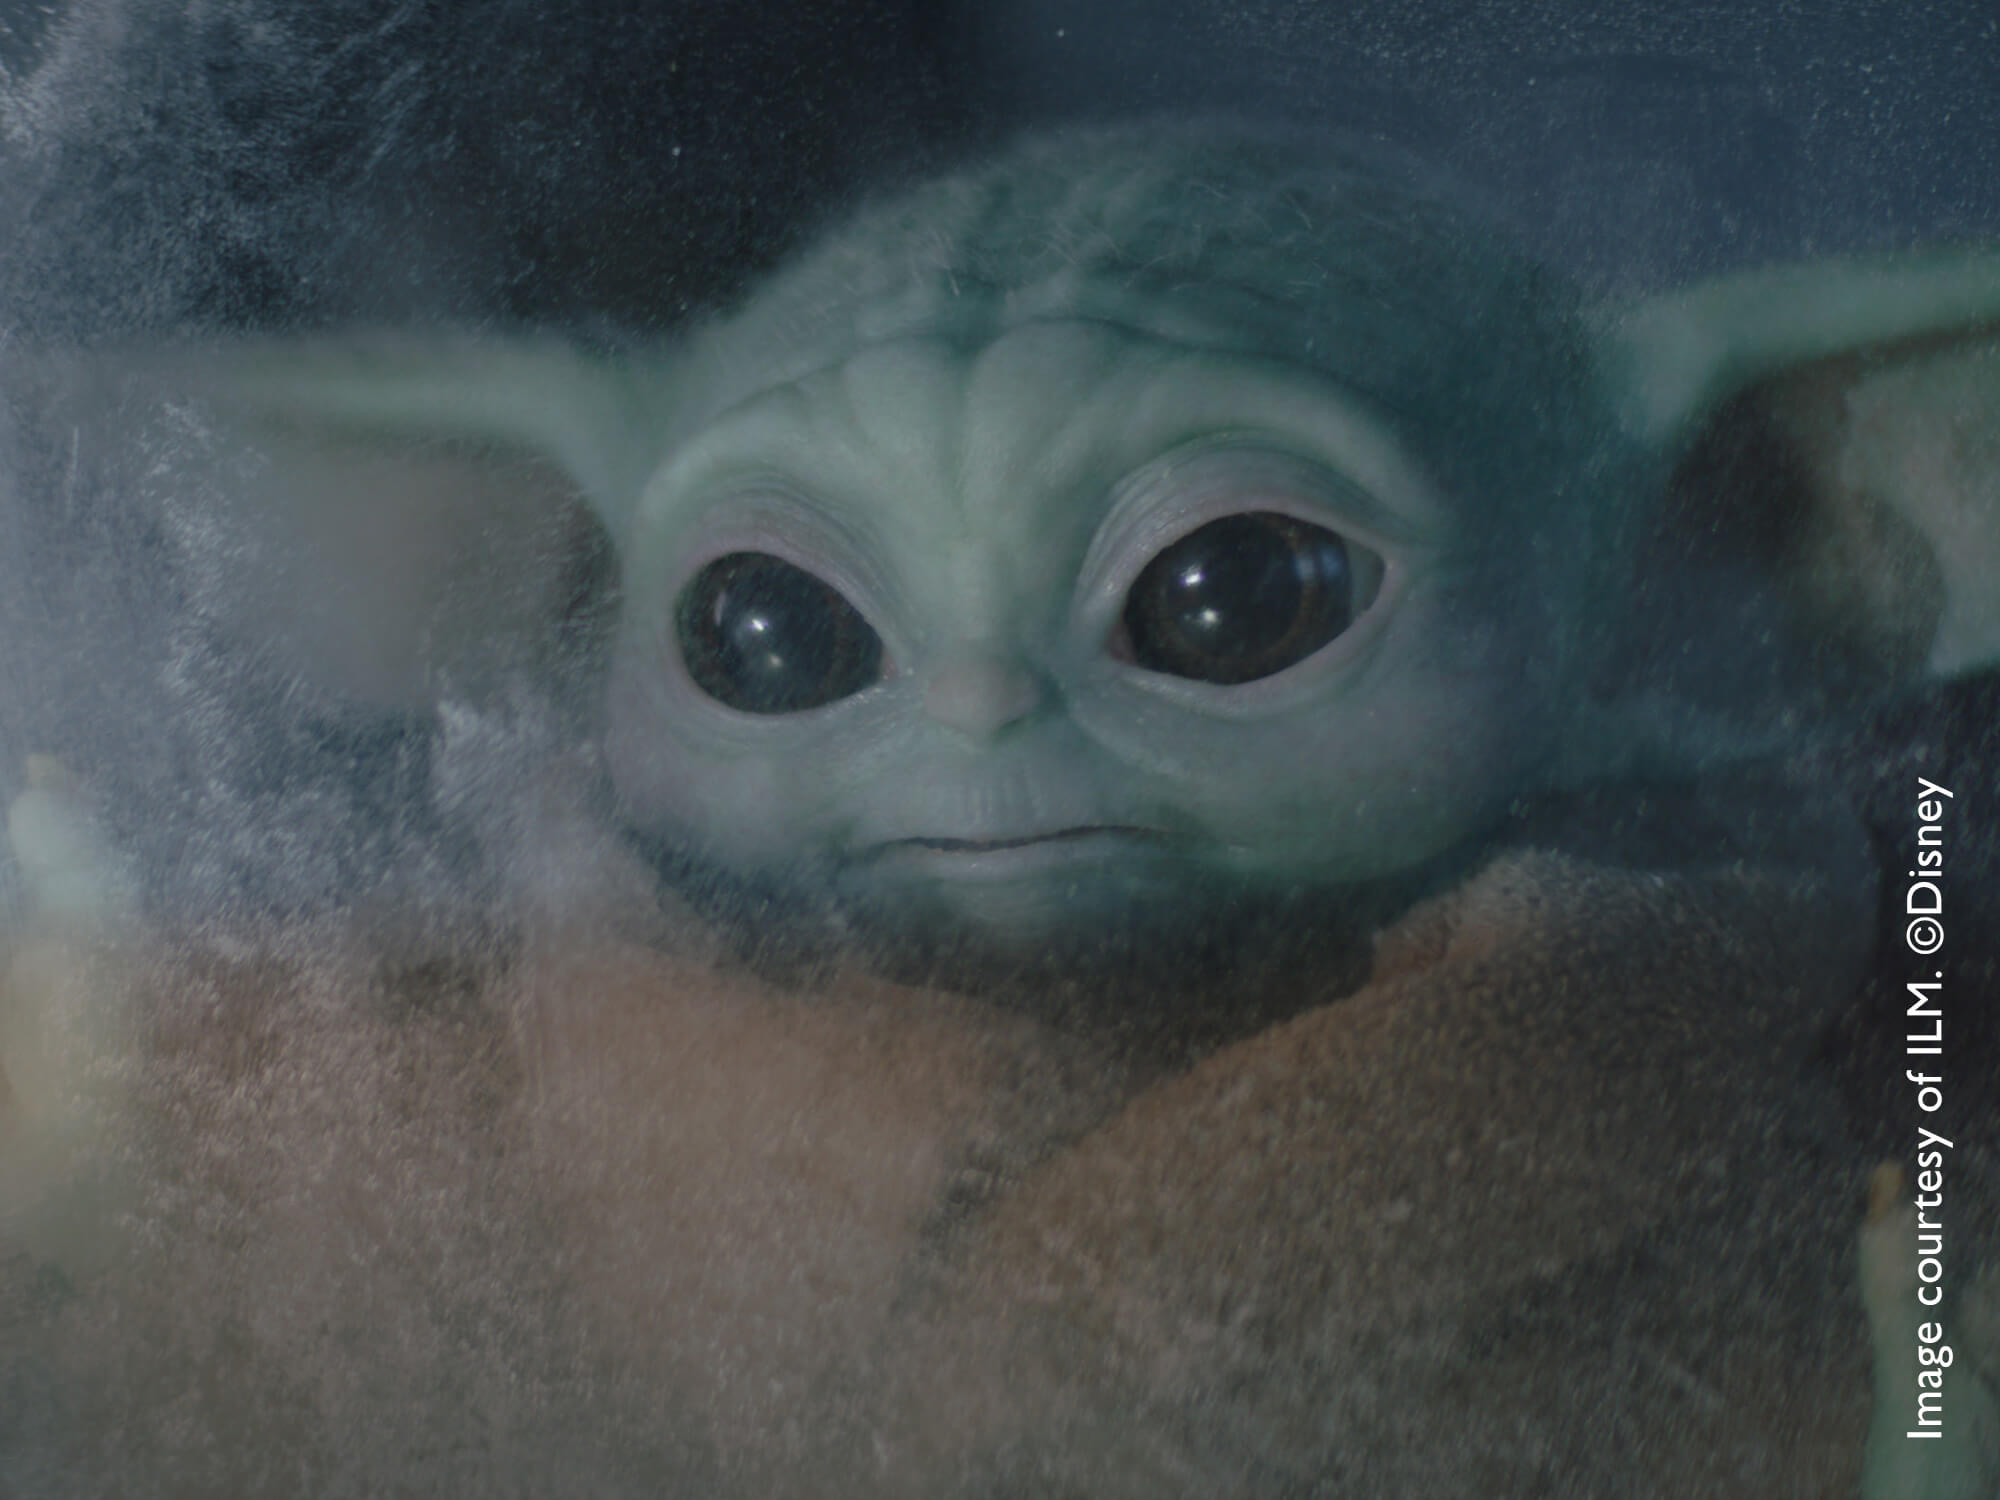 Close up of green alien character Grogu in The Mandalorian